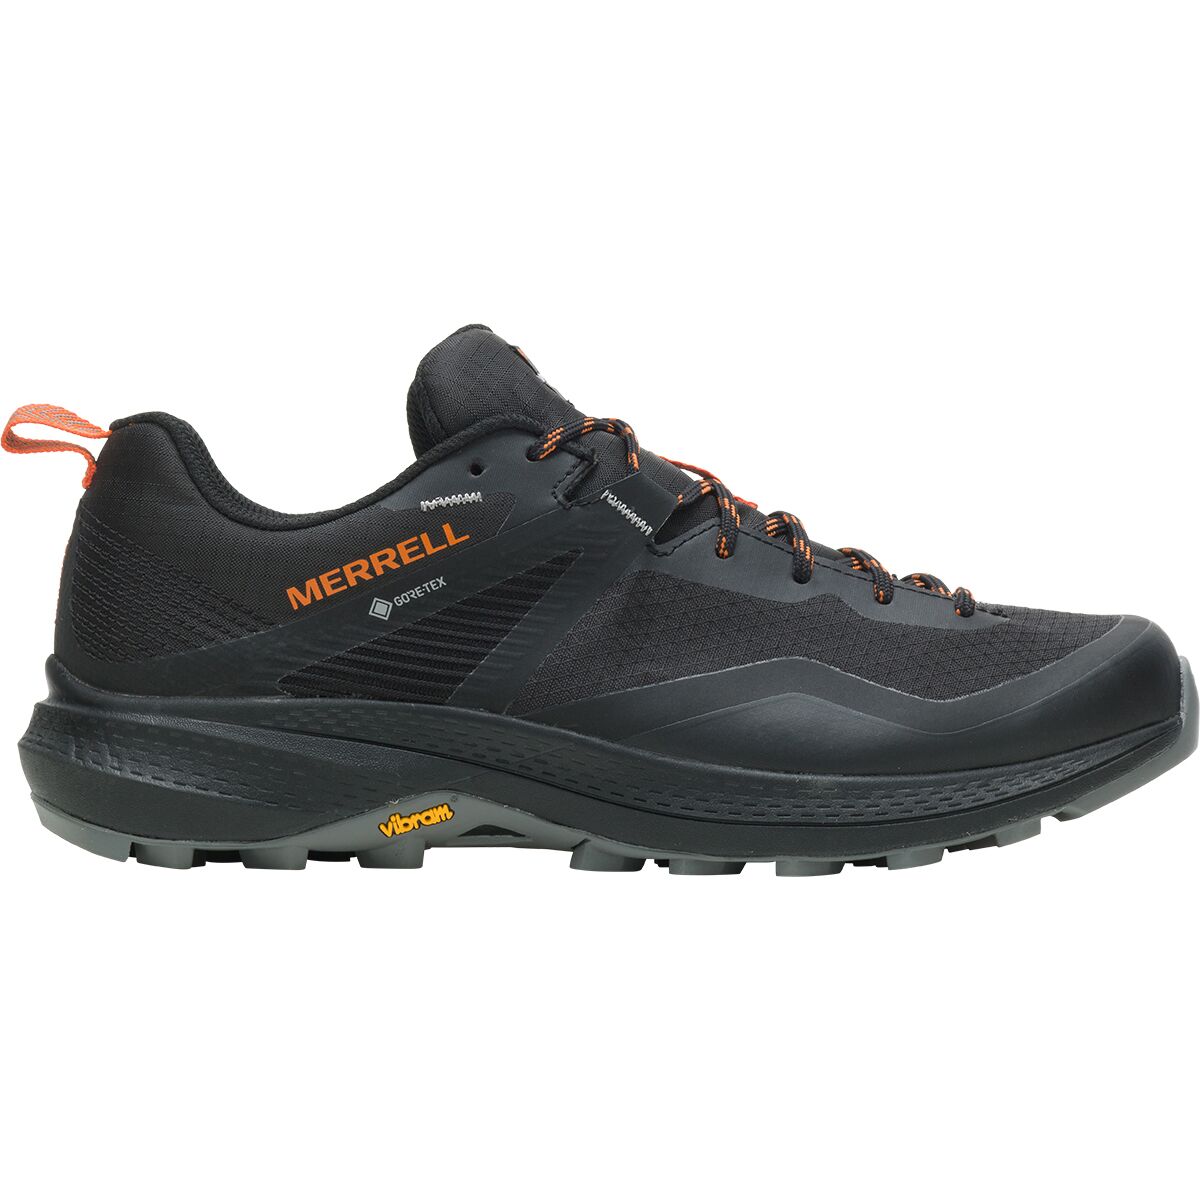 Merrell MQM 3 GTX Hiking Shoe - Men's